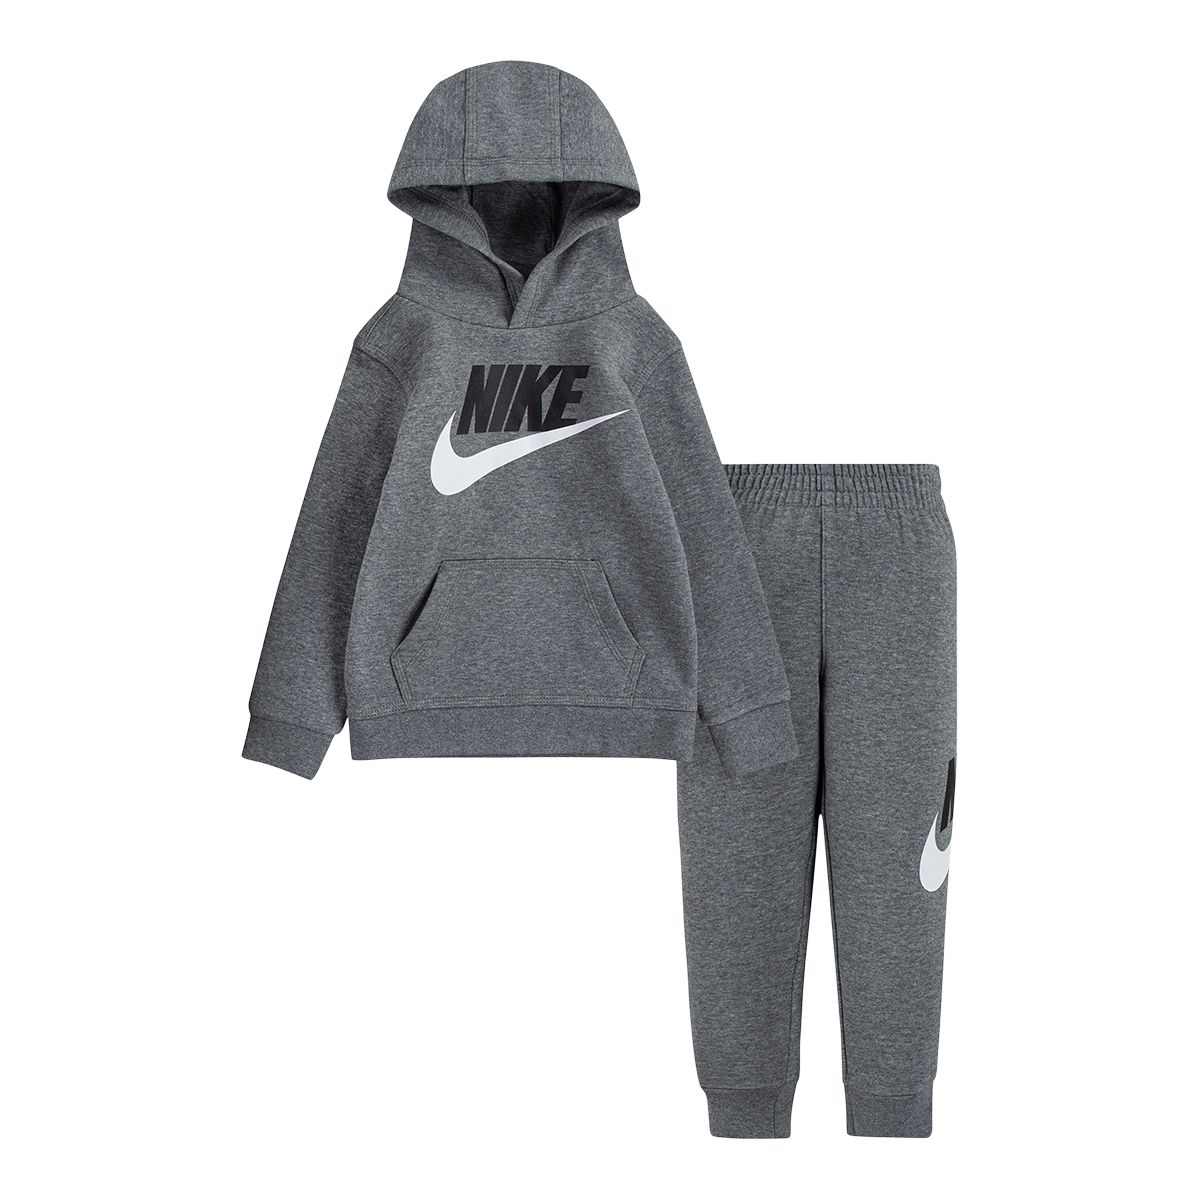 Nike Infant Boys' Club Fleece Pullover Hoodie Set